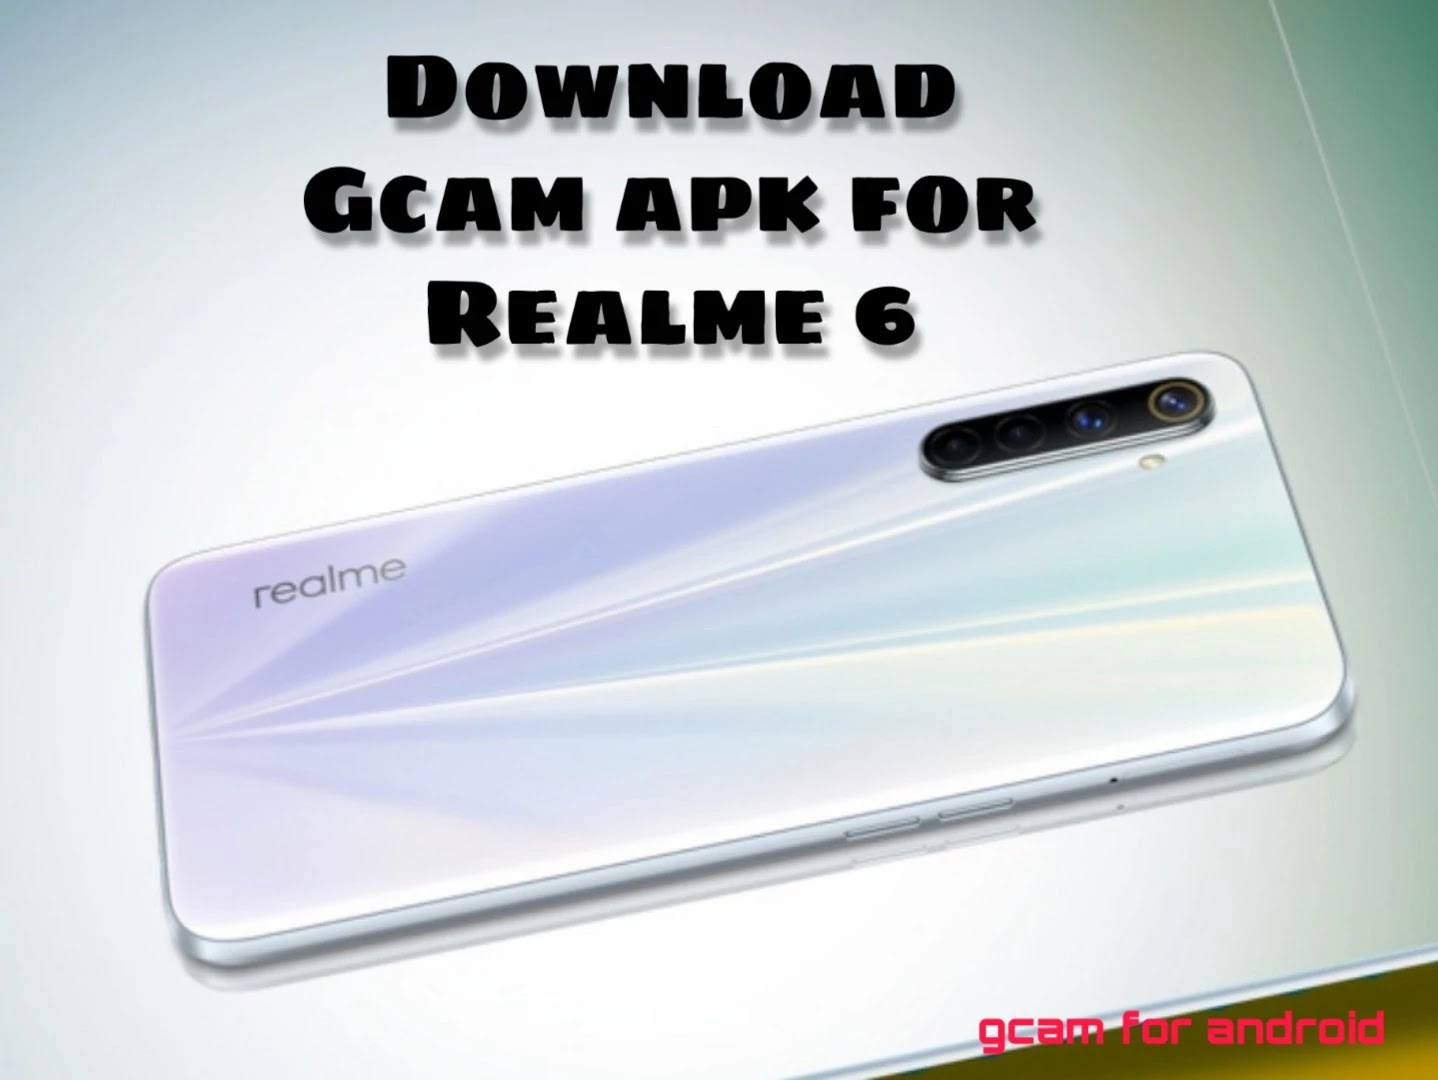 Download Gcam apk for Realme 6(latest 2021)